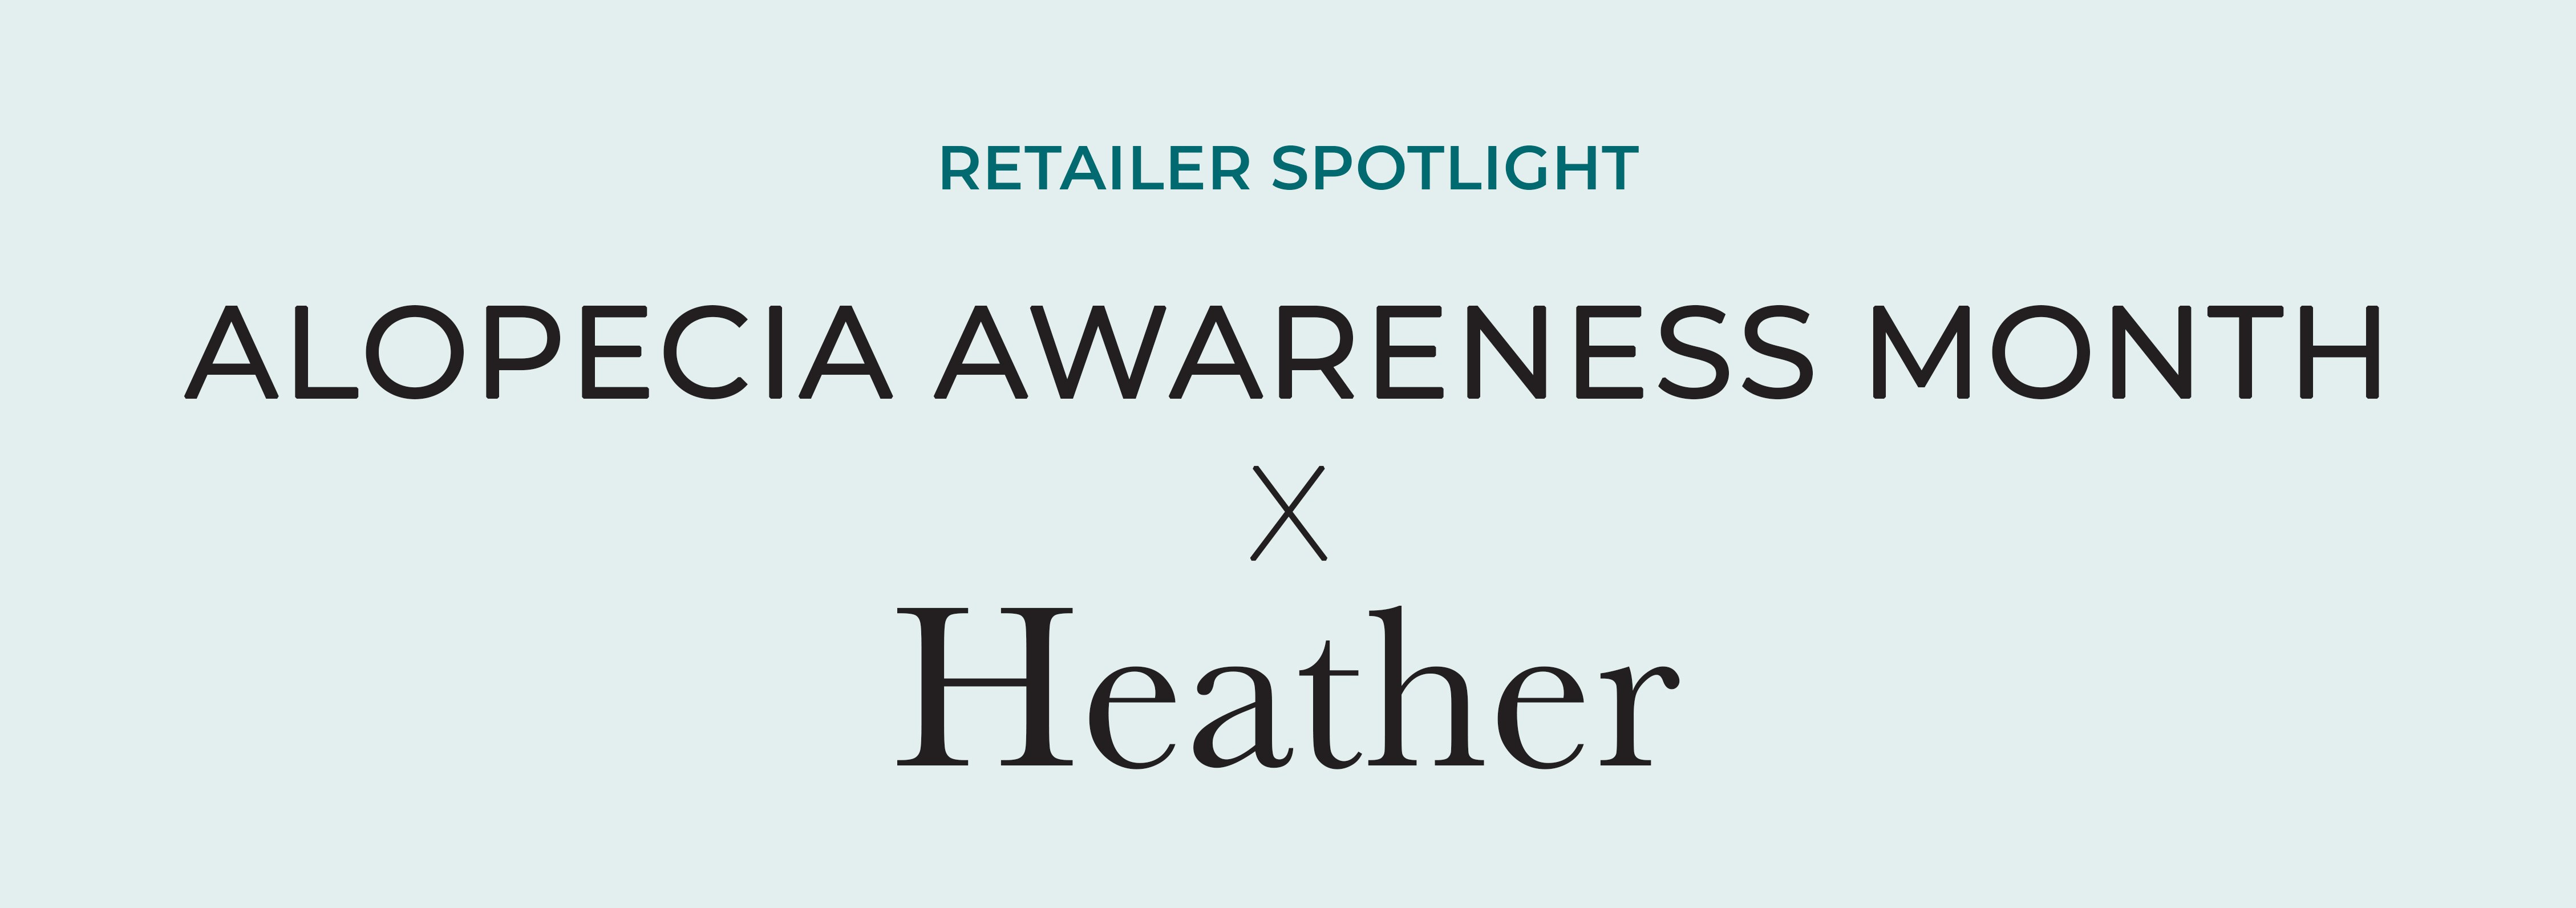 Alopecia Awareness Month x Retailer Spotlight